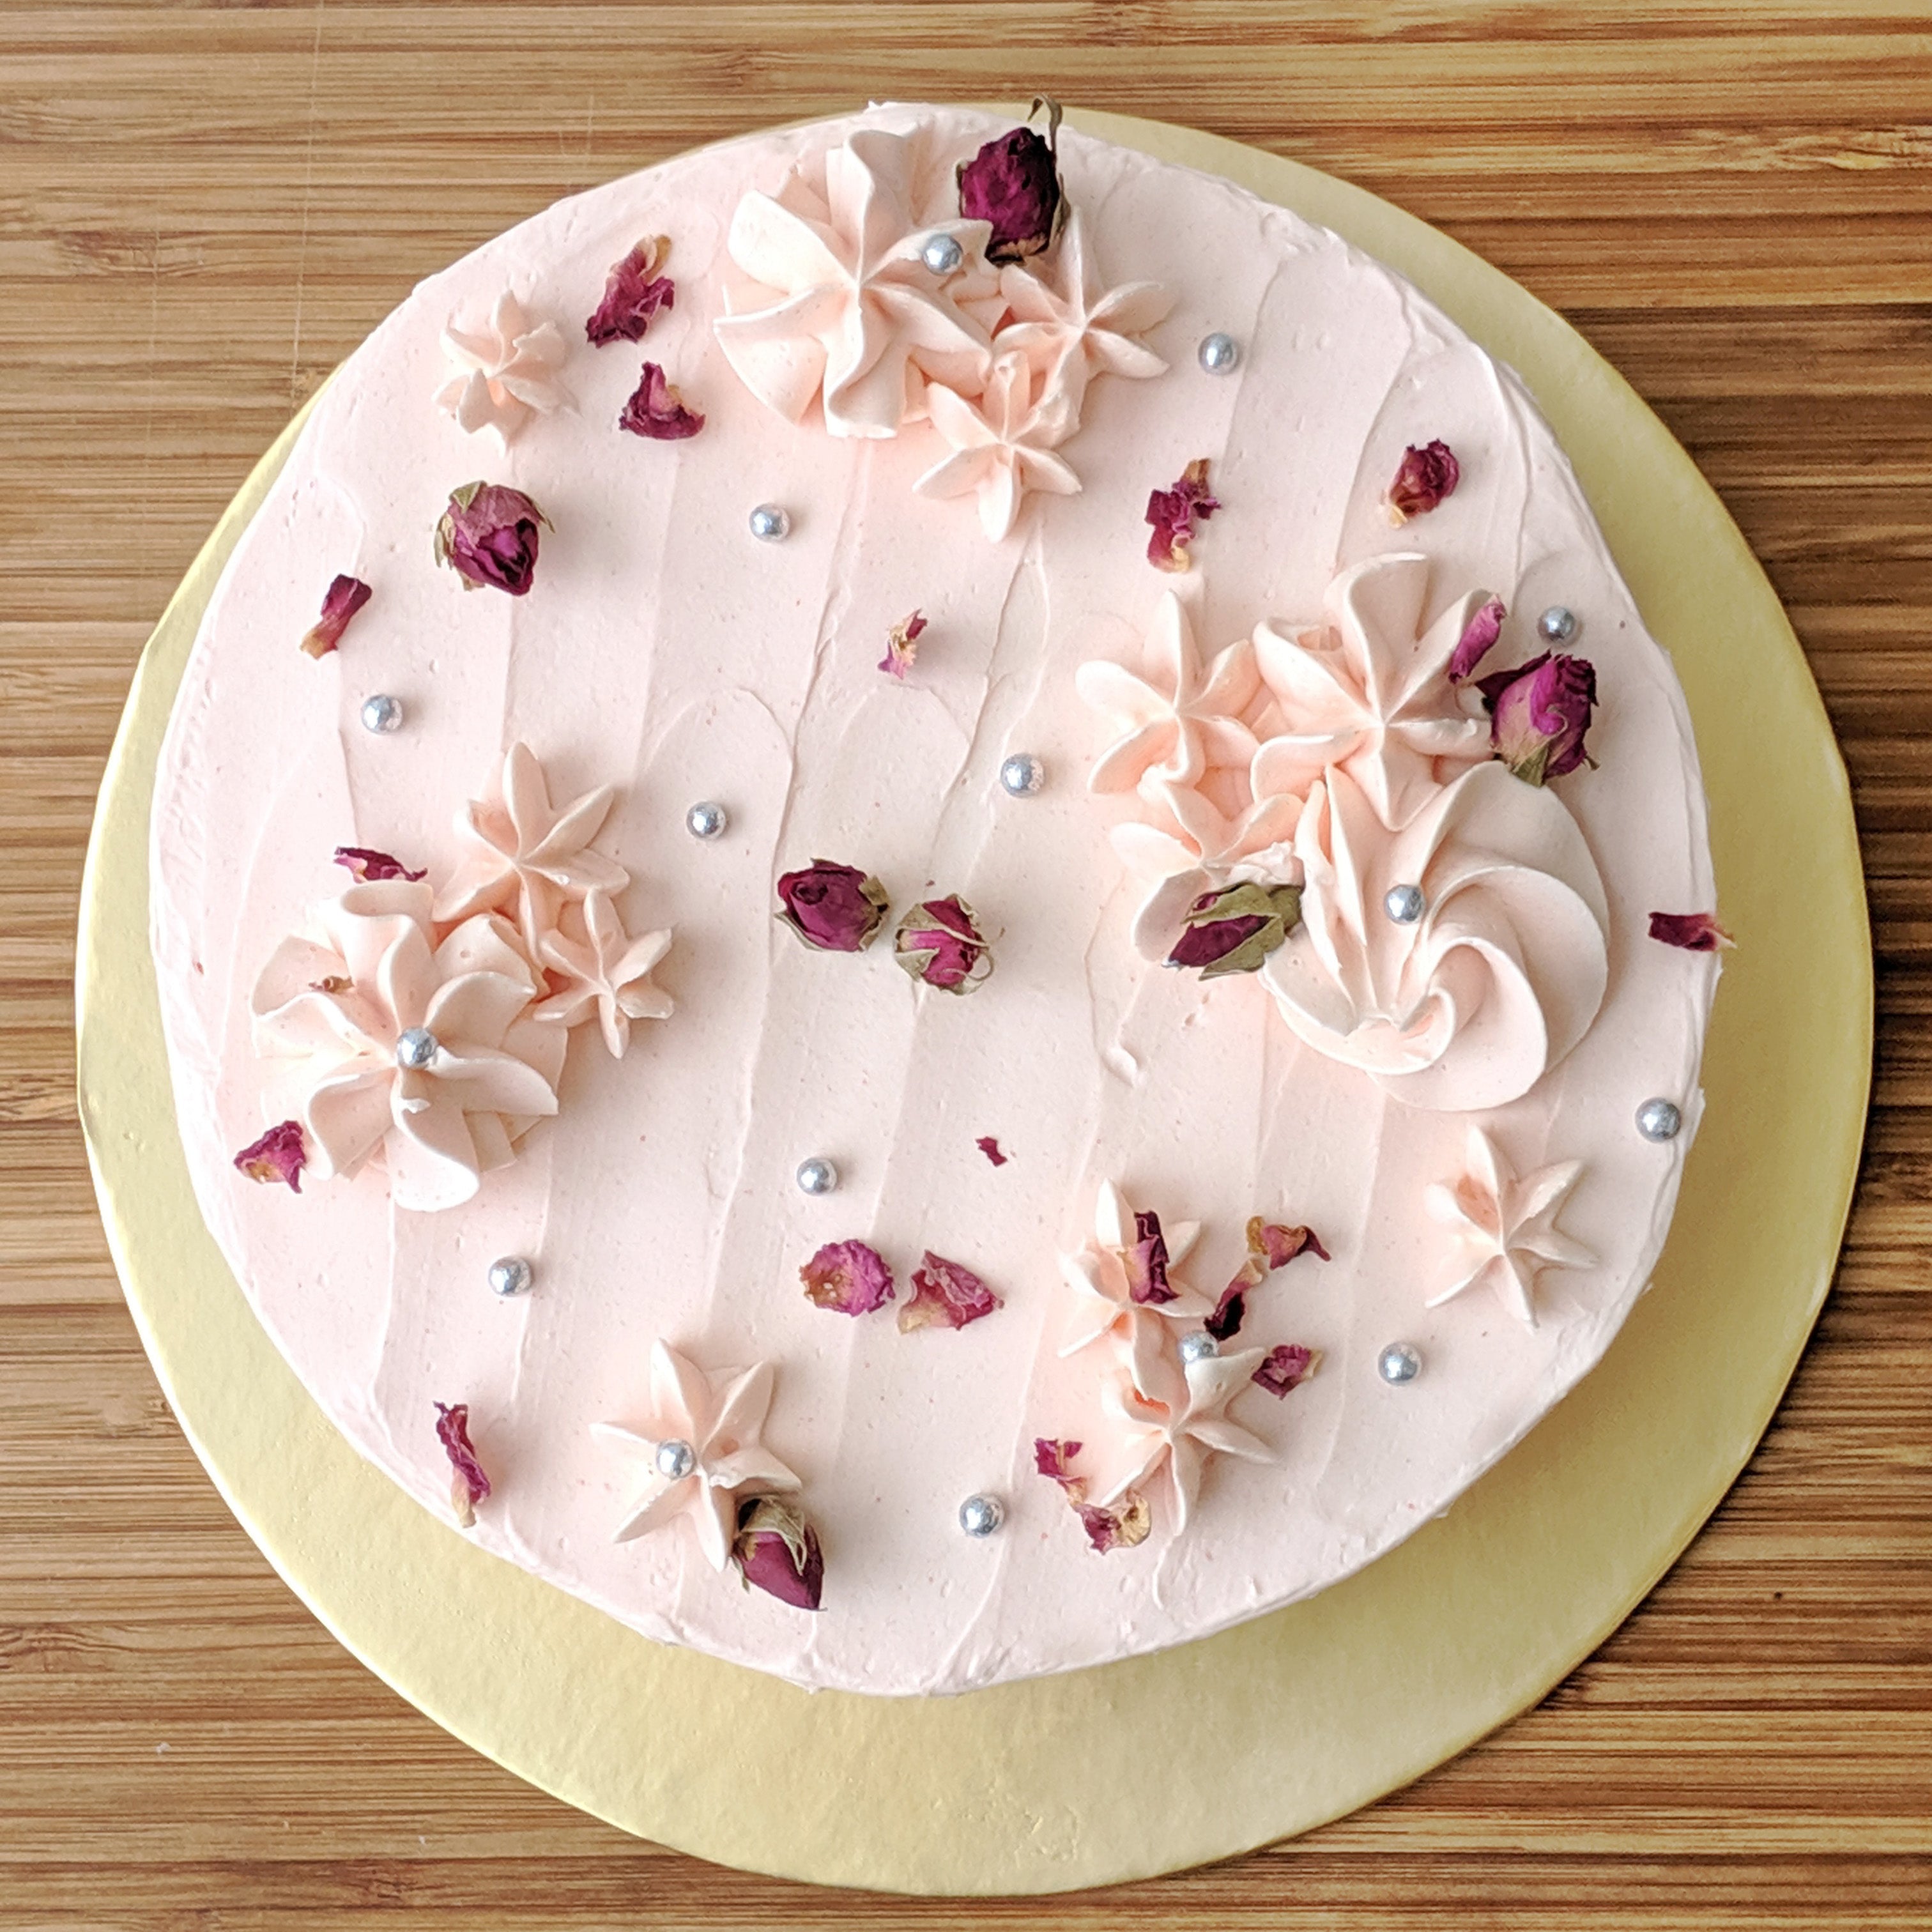 Lychee Rose Cake *Bestseller*